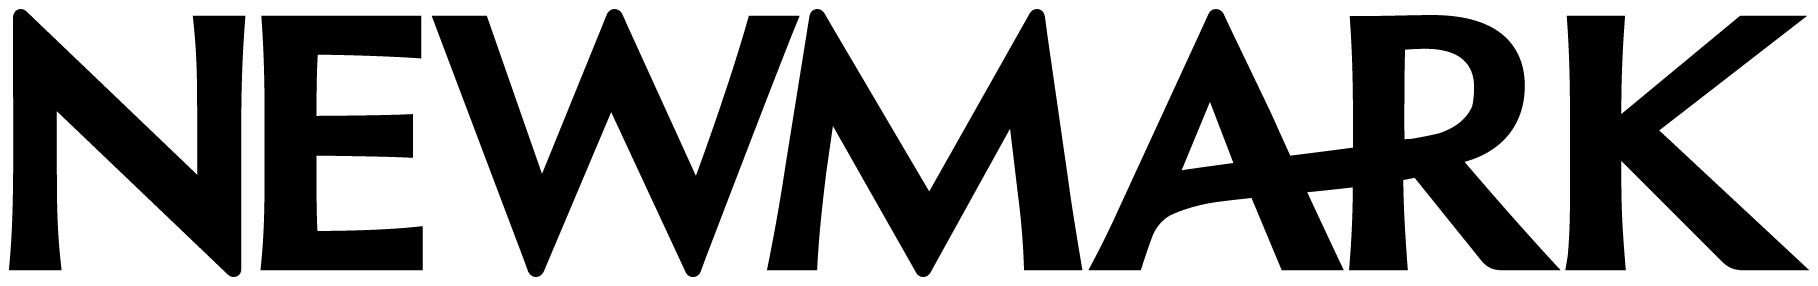 https://mma.prnewswire.com/media/1327384/Newmark_Logo.jpg?p=publish